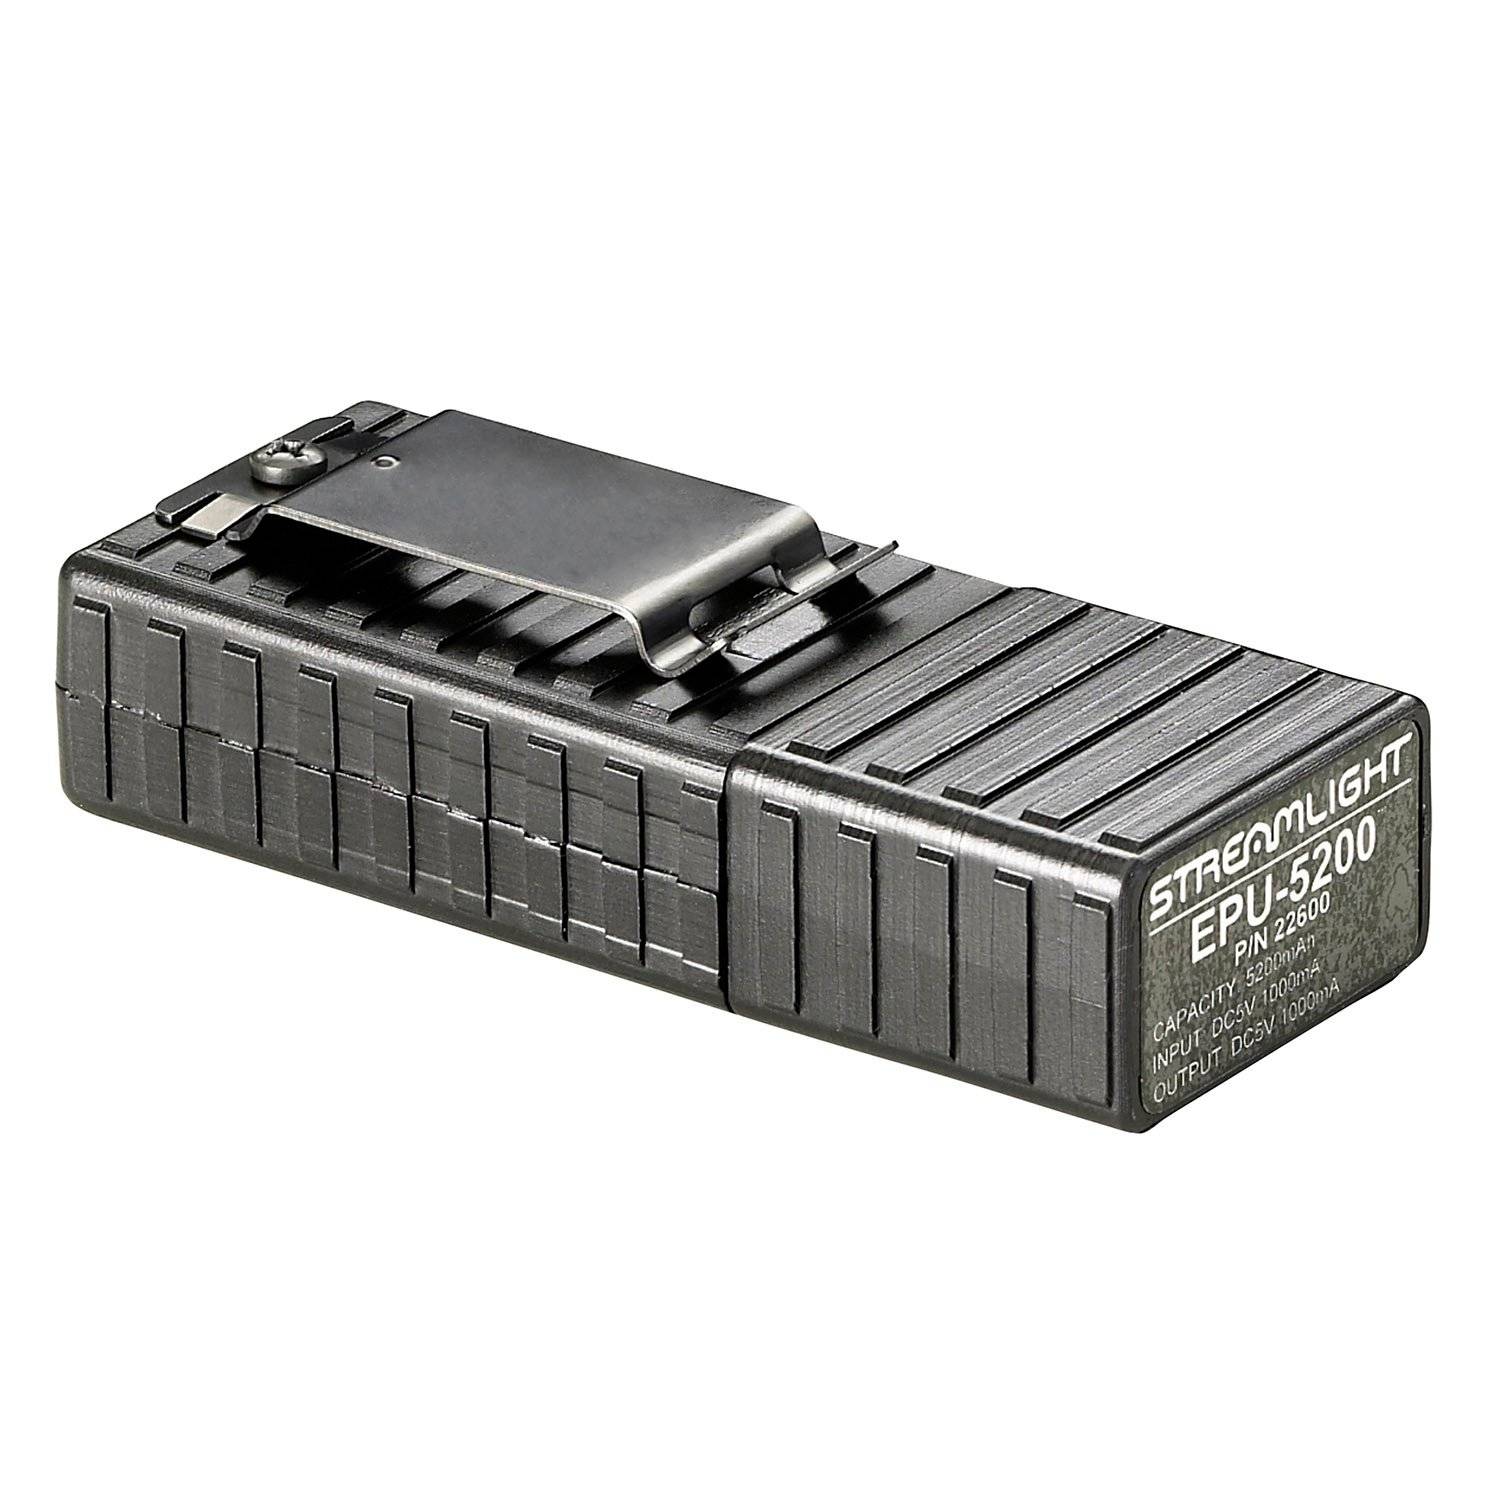 Streamlight EPU-5200 Portable Power Pack